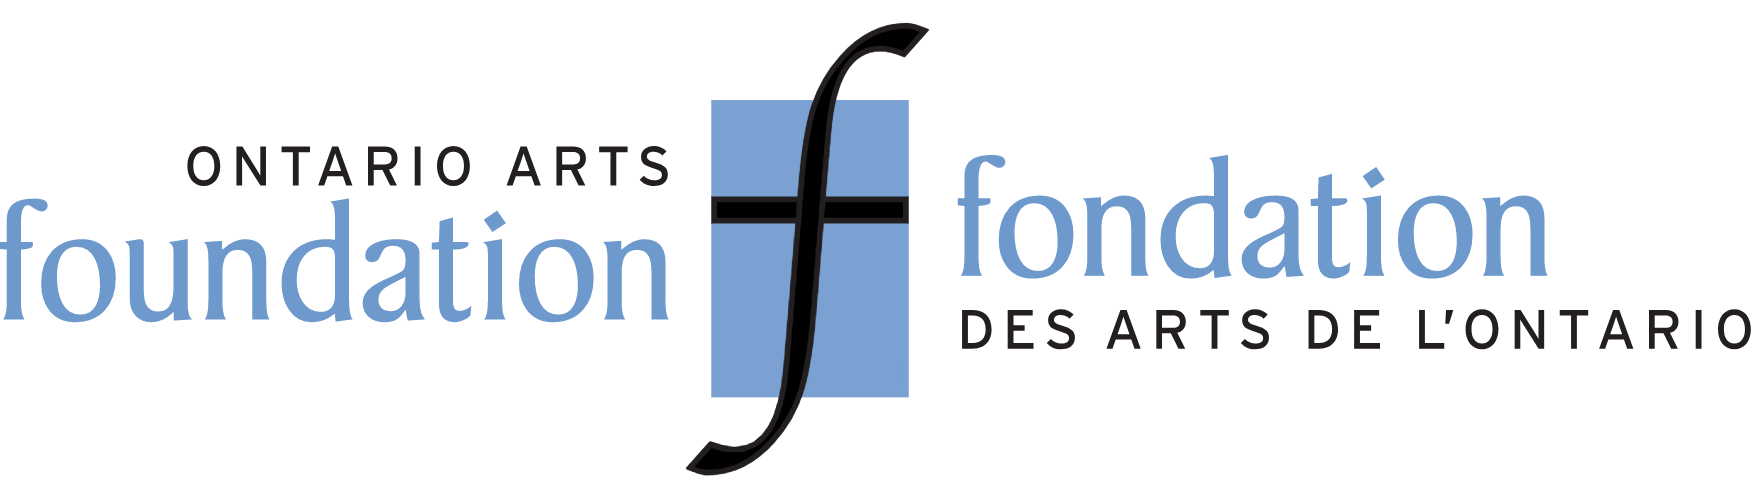 Ontario Arts Foundation logo